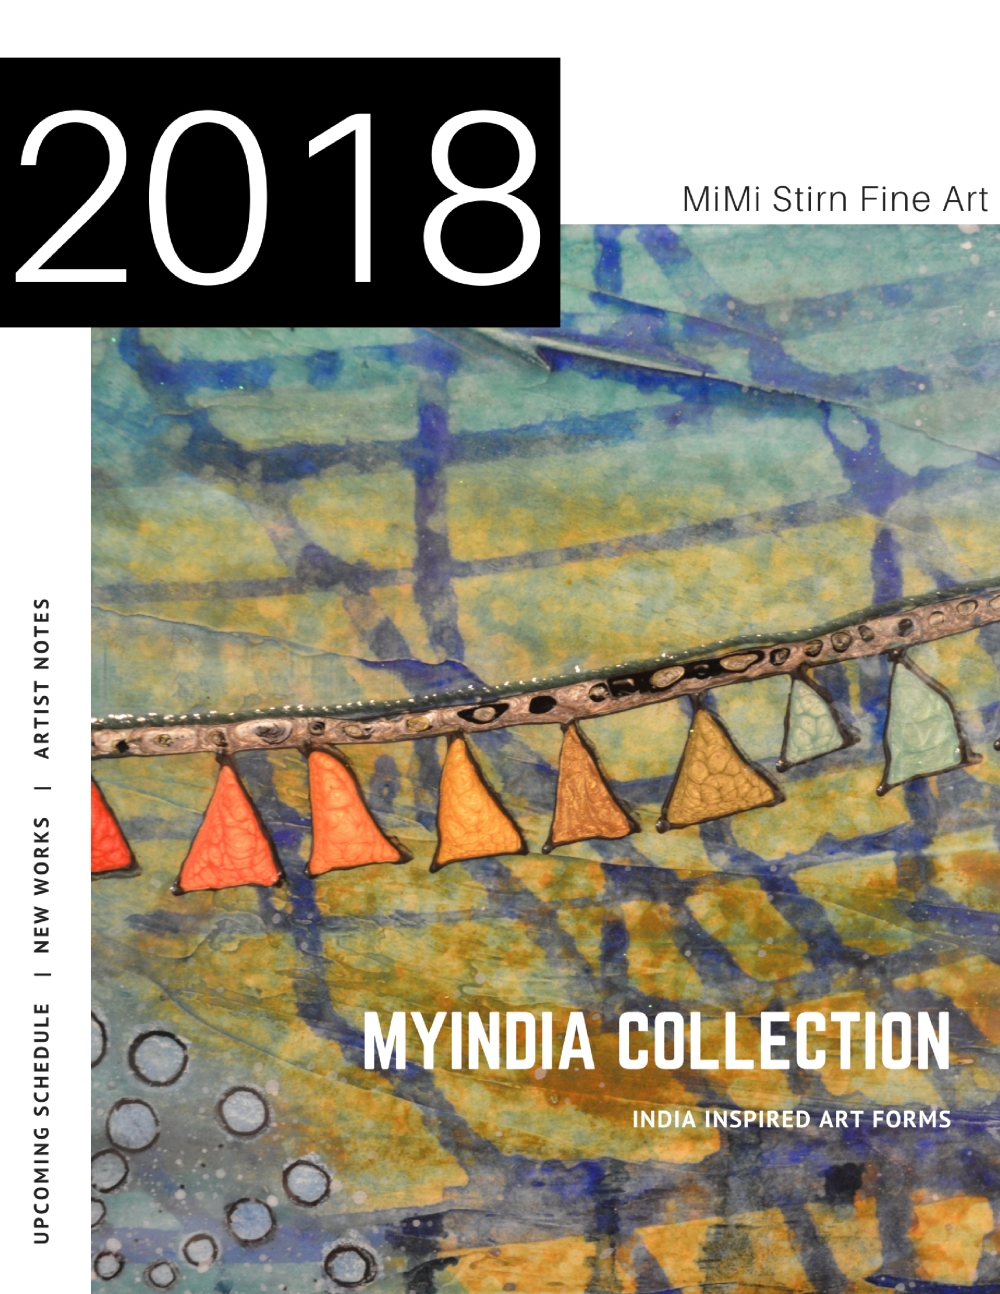 MiMi Stirn, Myindia Collection 2018 (1)